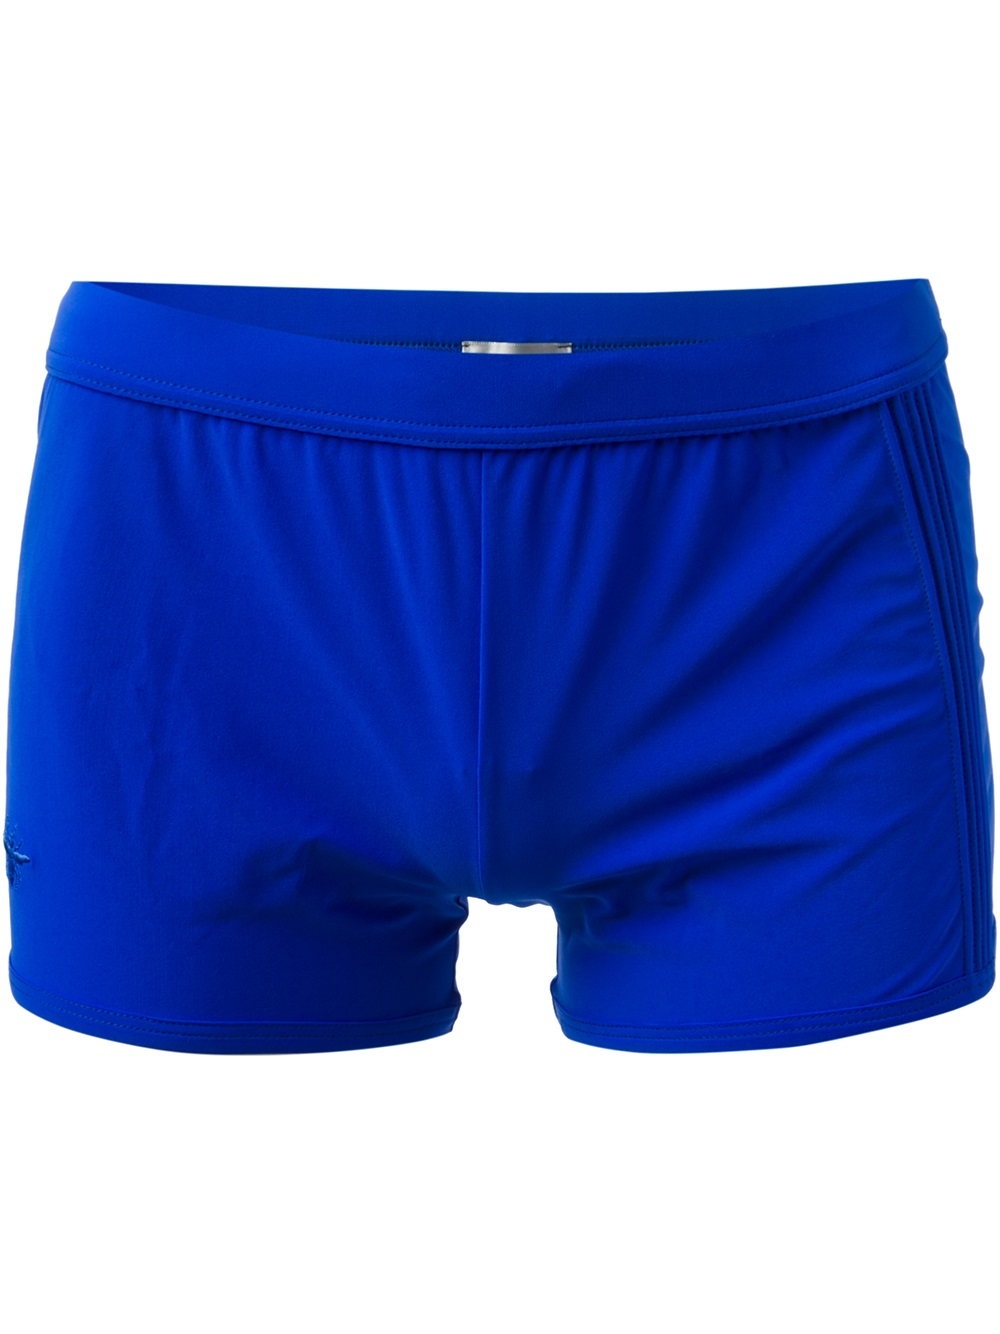 Dior Homme Boxer Shorts in Blue for Men | Lyst